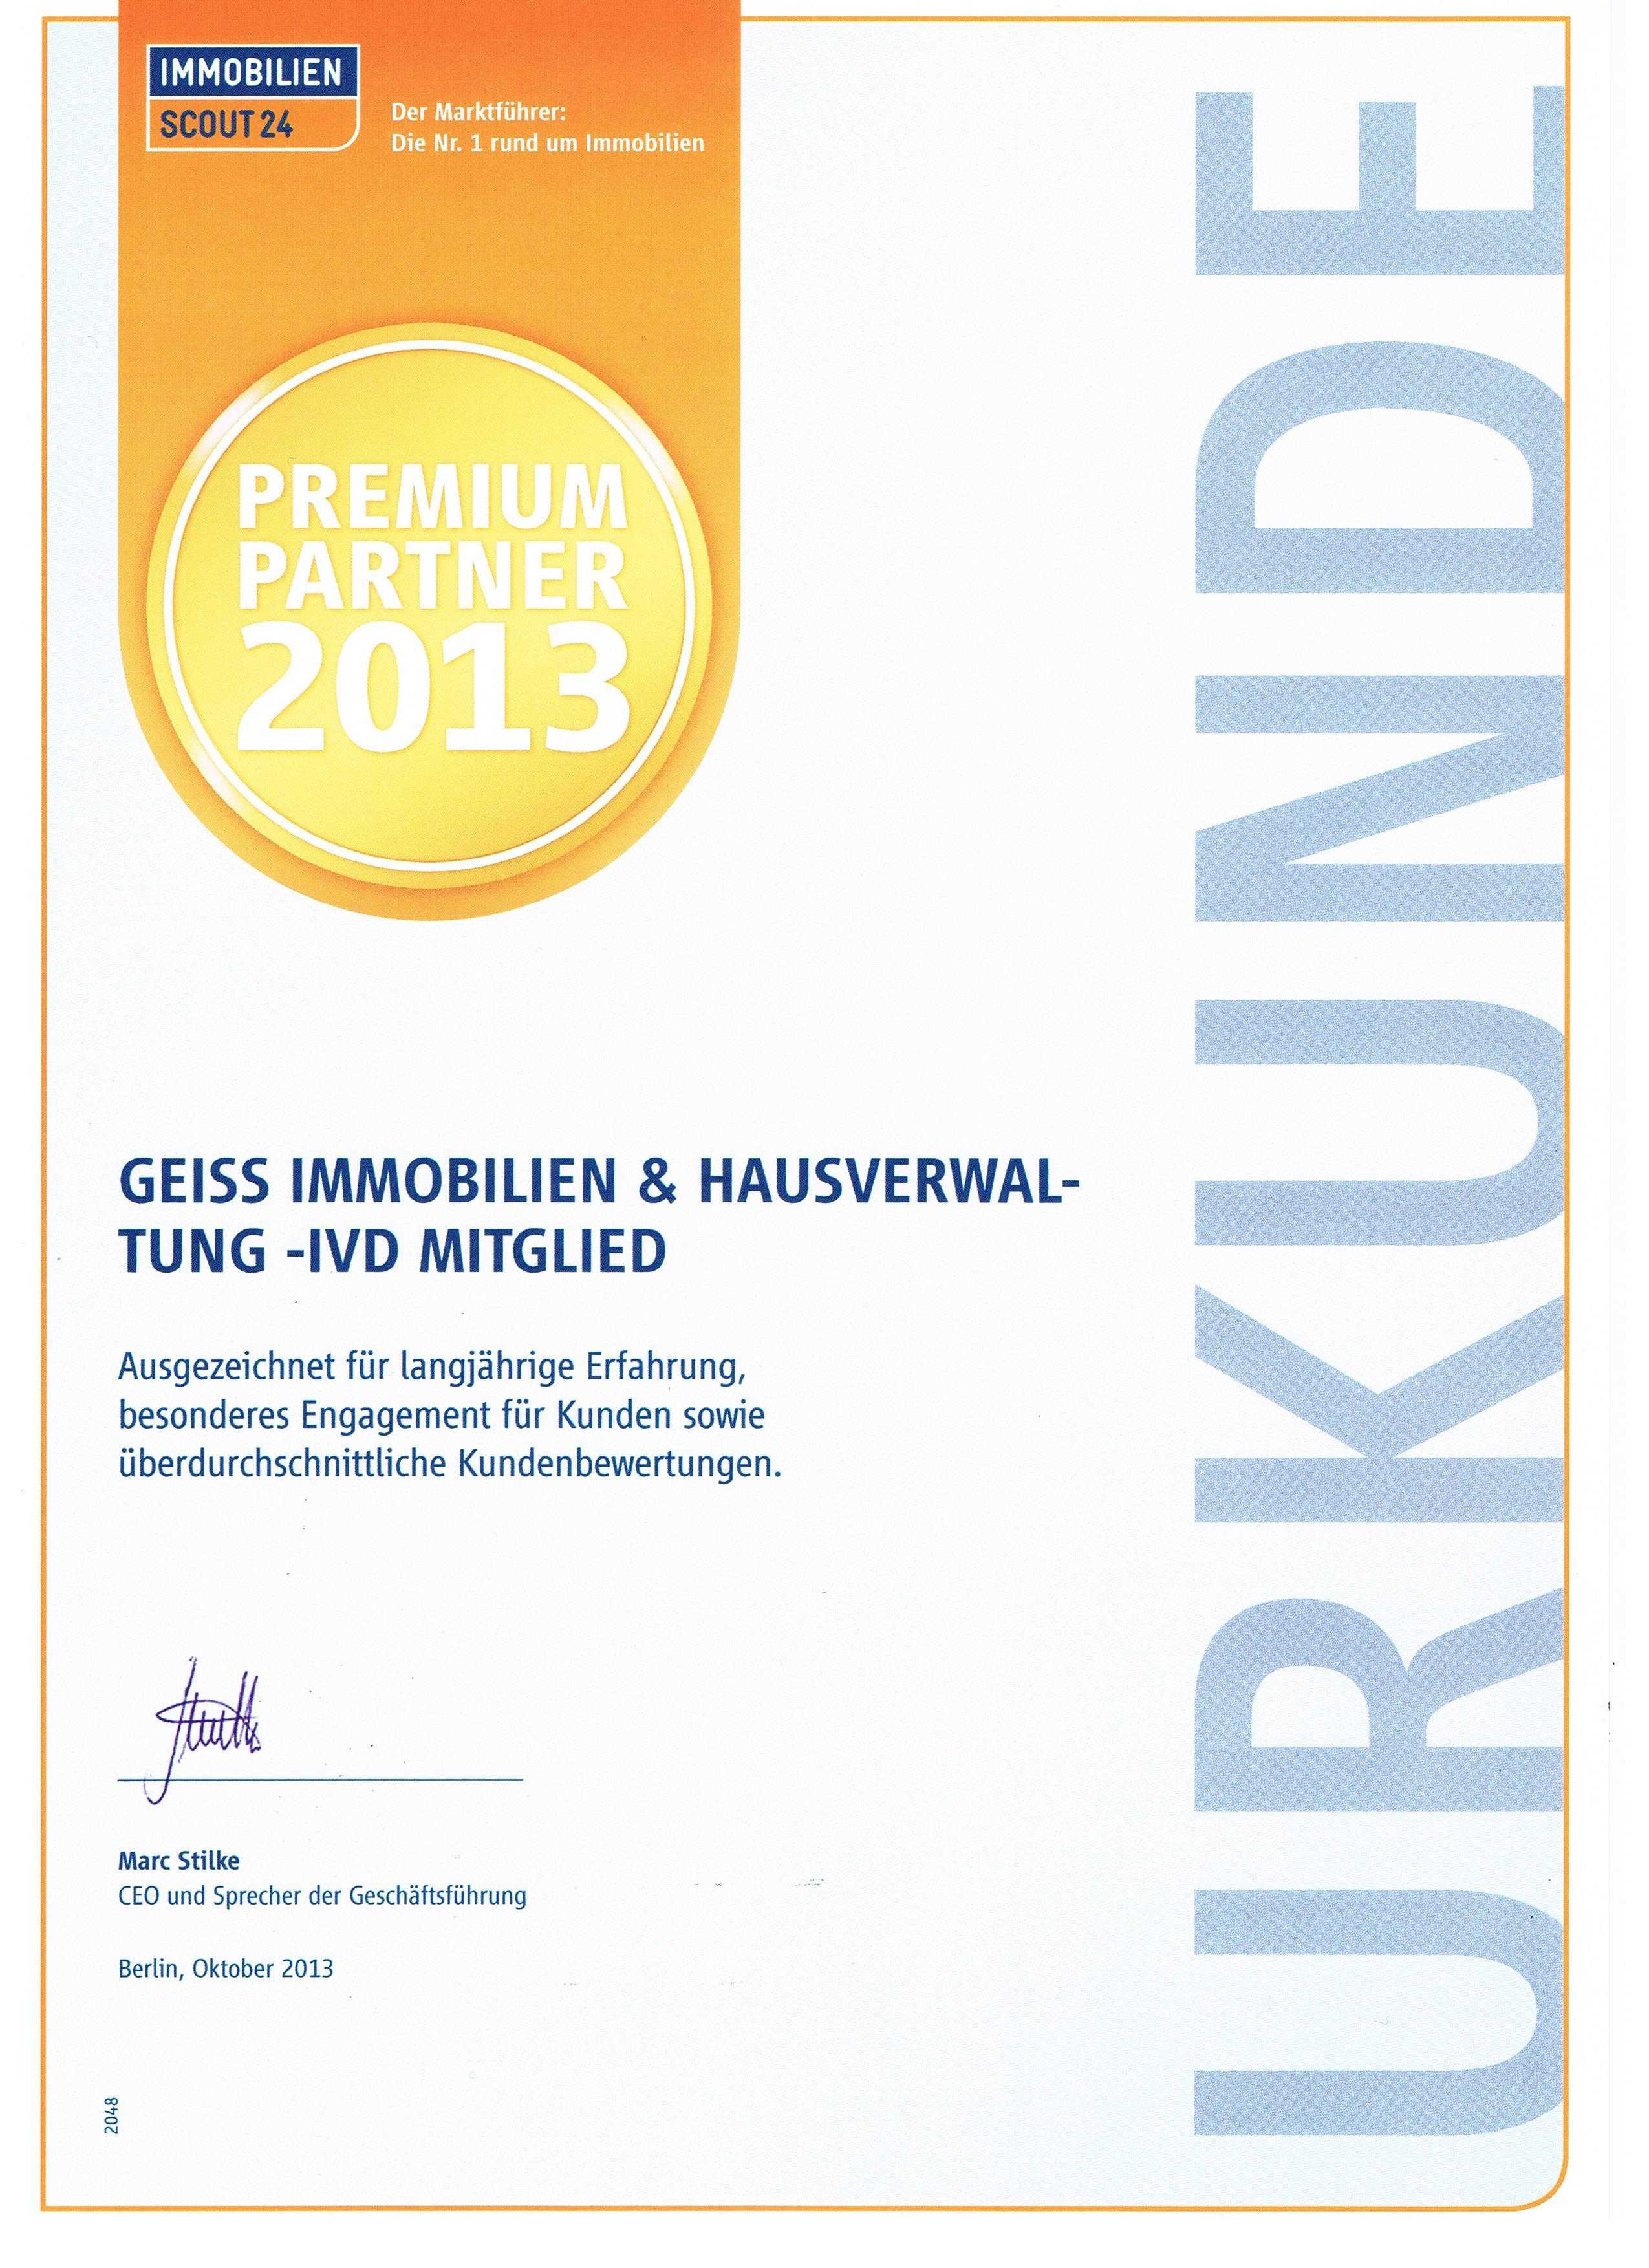 ImmobilienScout - Premium Partner 2013